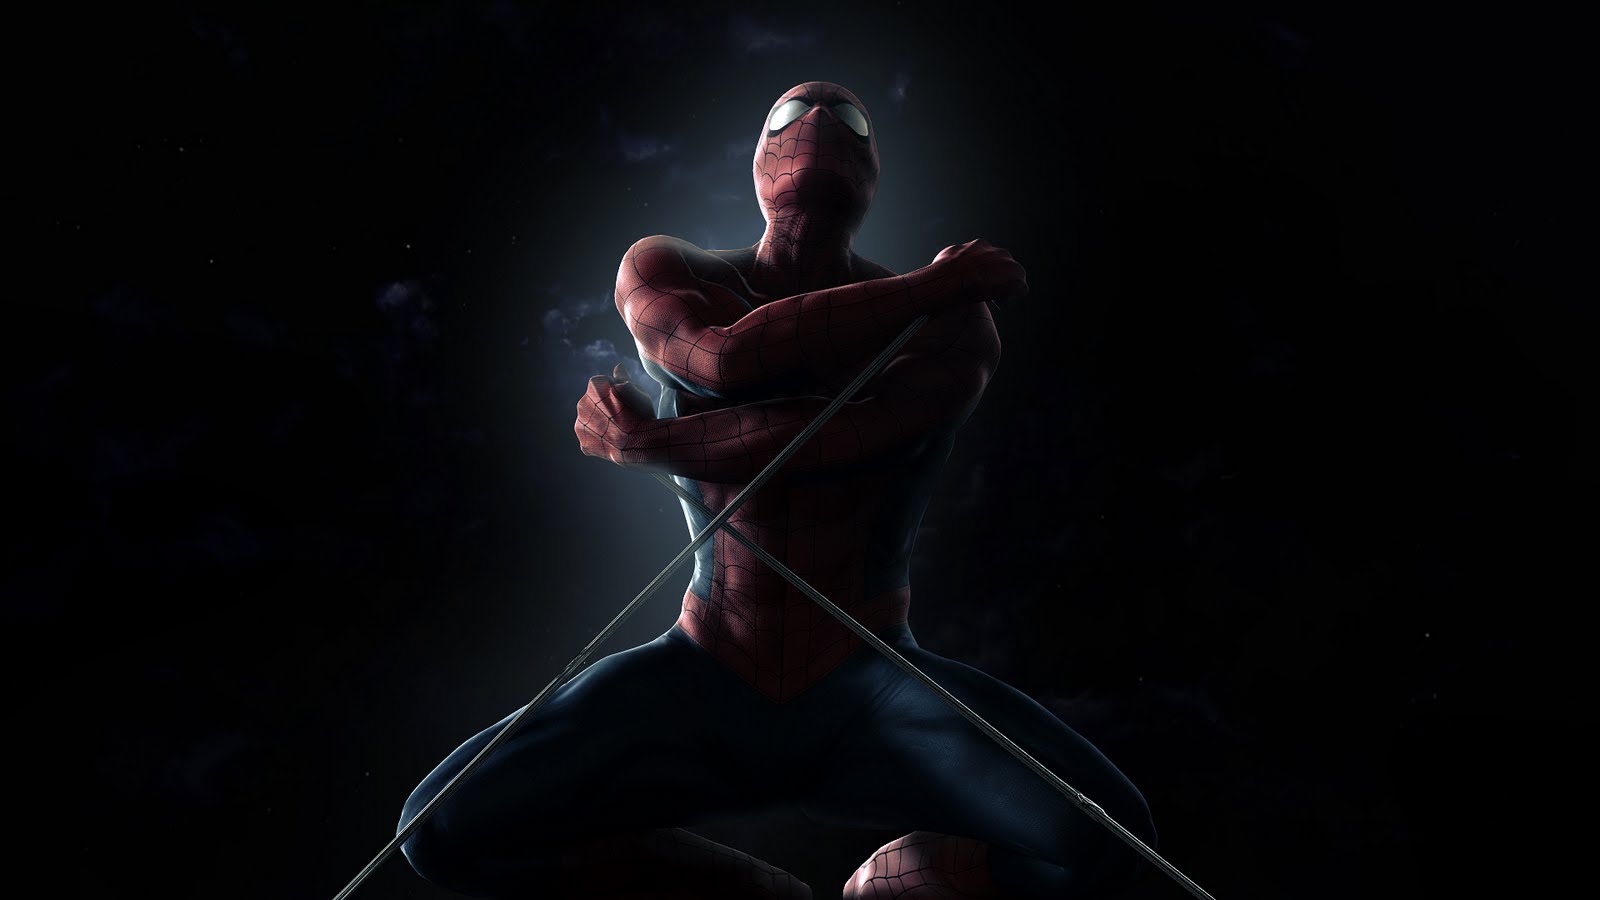 Spiderman Hd Wallpapers Free Image for Desktop, Laptop, Tablet